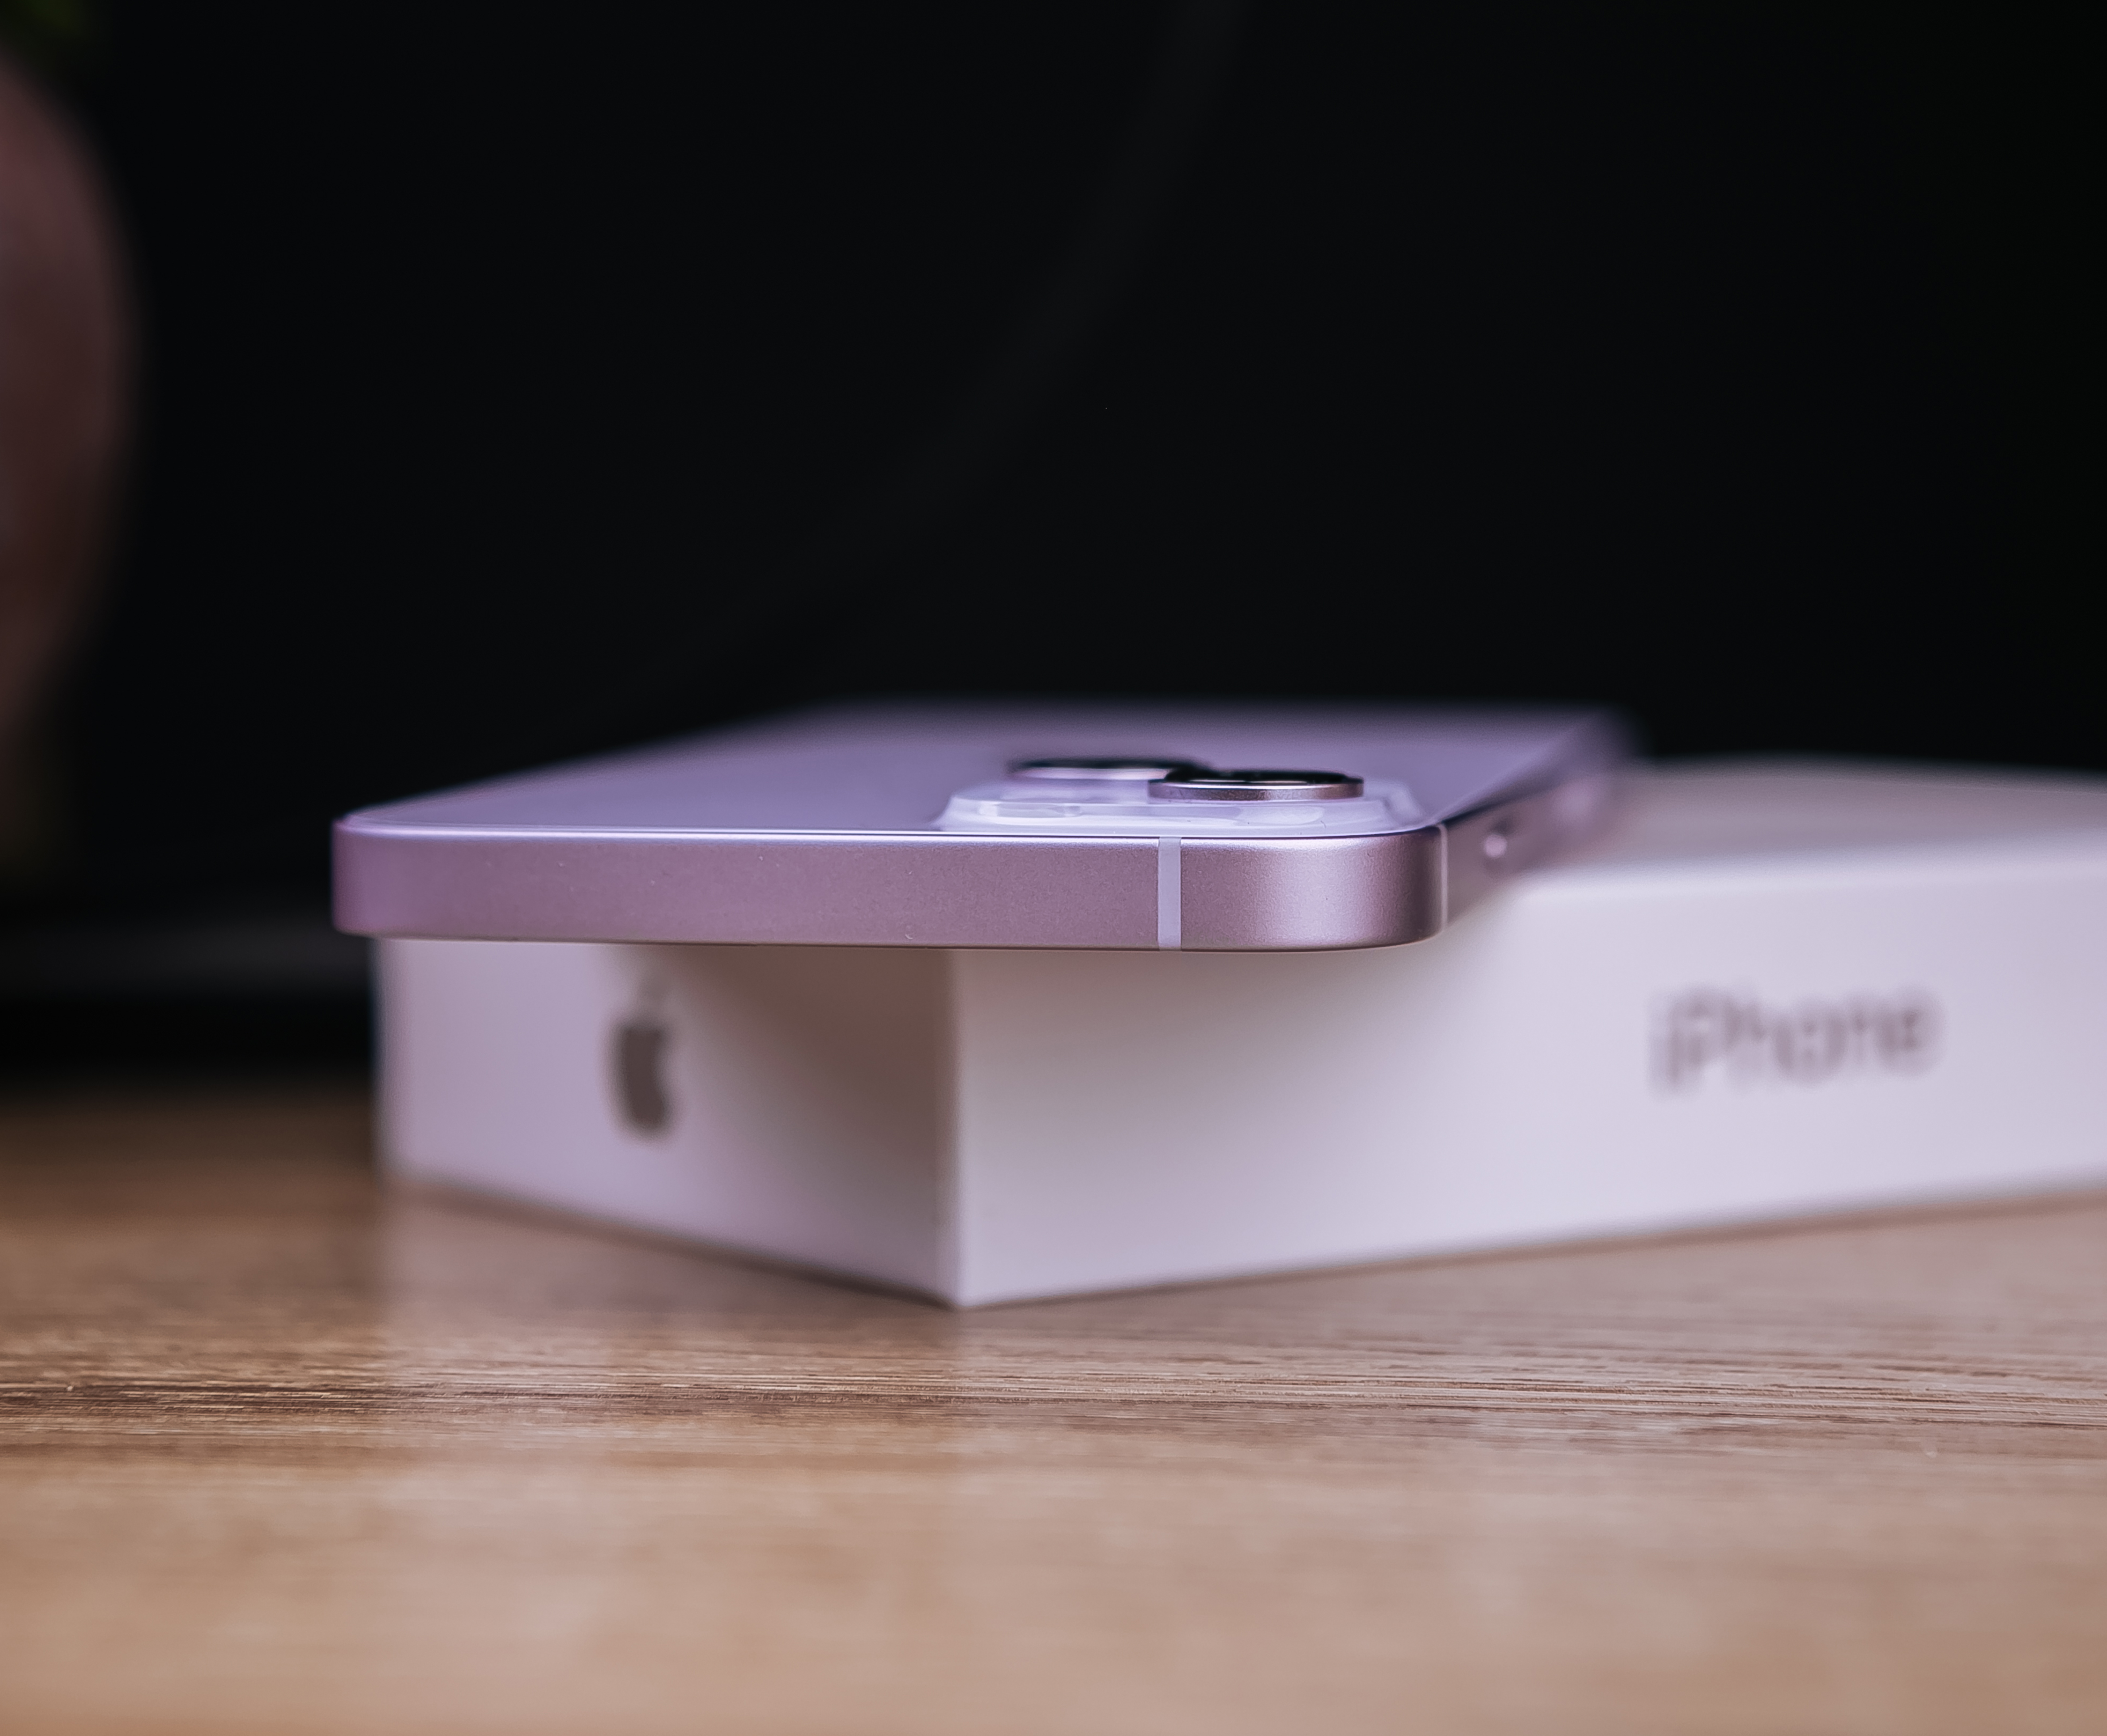 Apple iPhone 14 256GB Purple (MPWA3) б/у